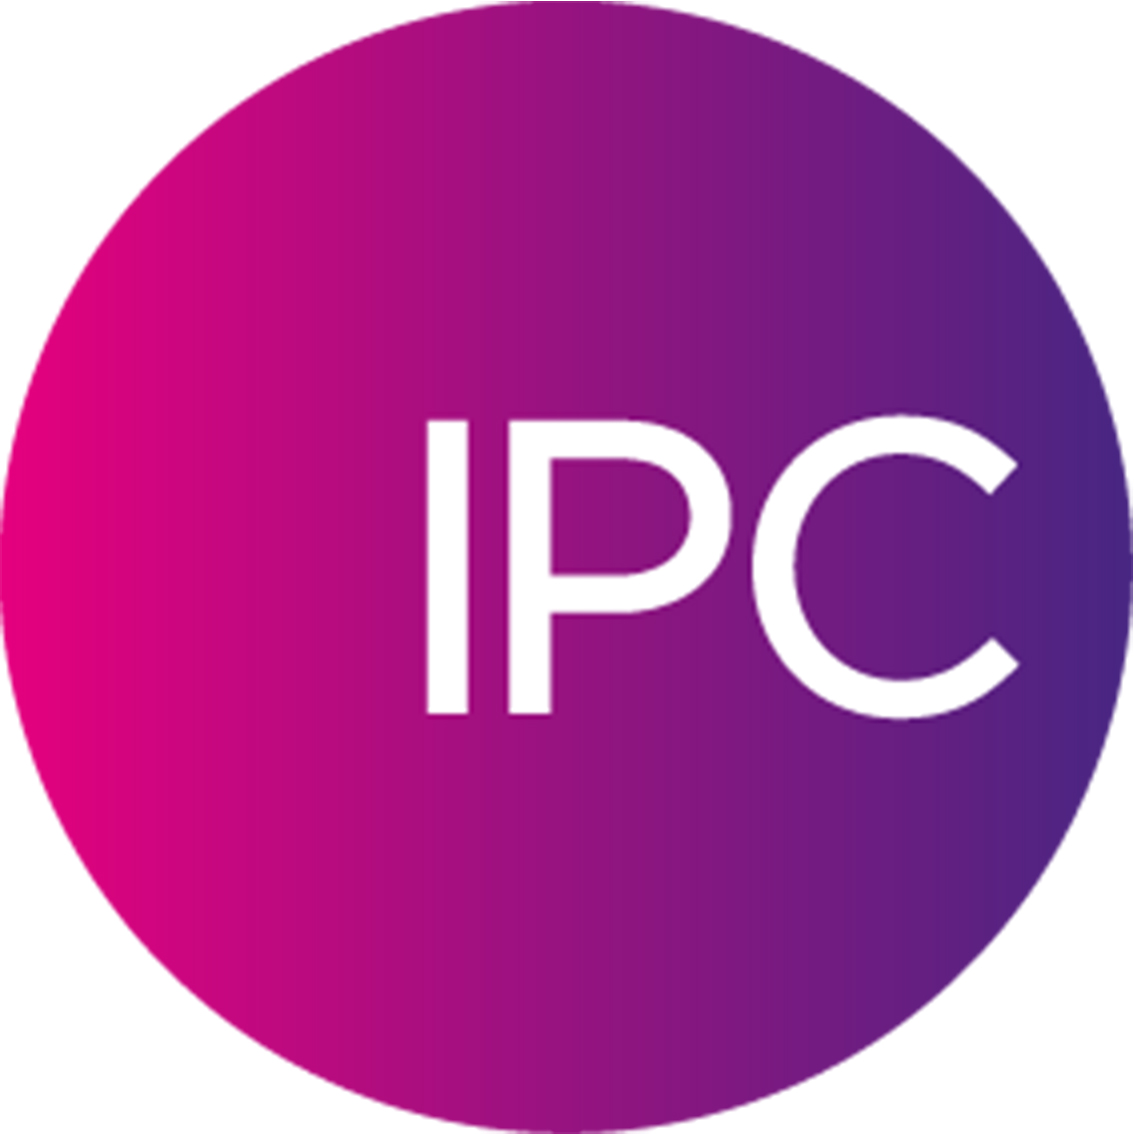 logo IPC